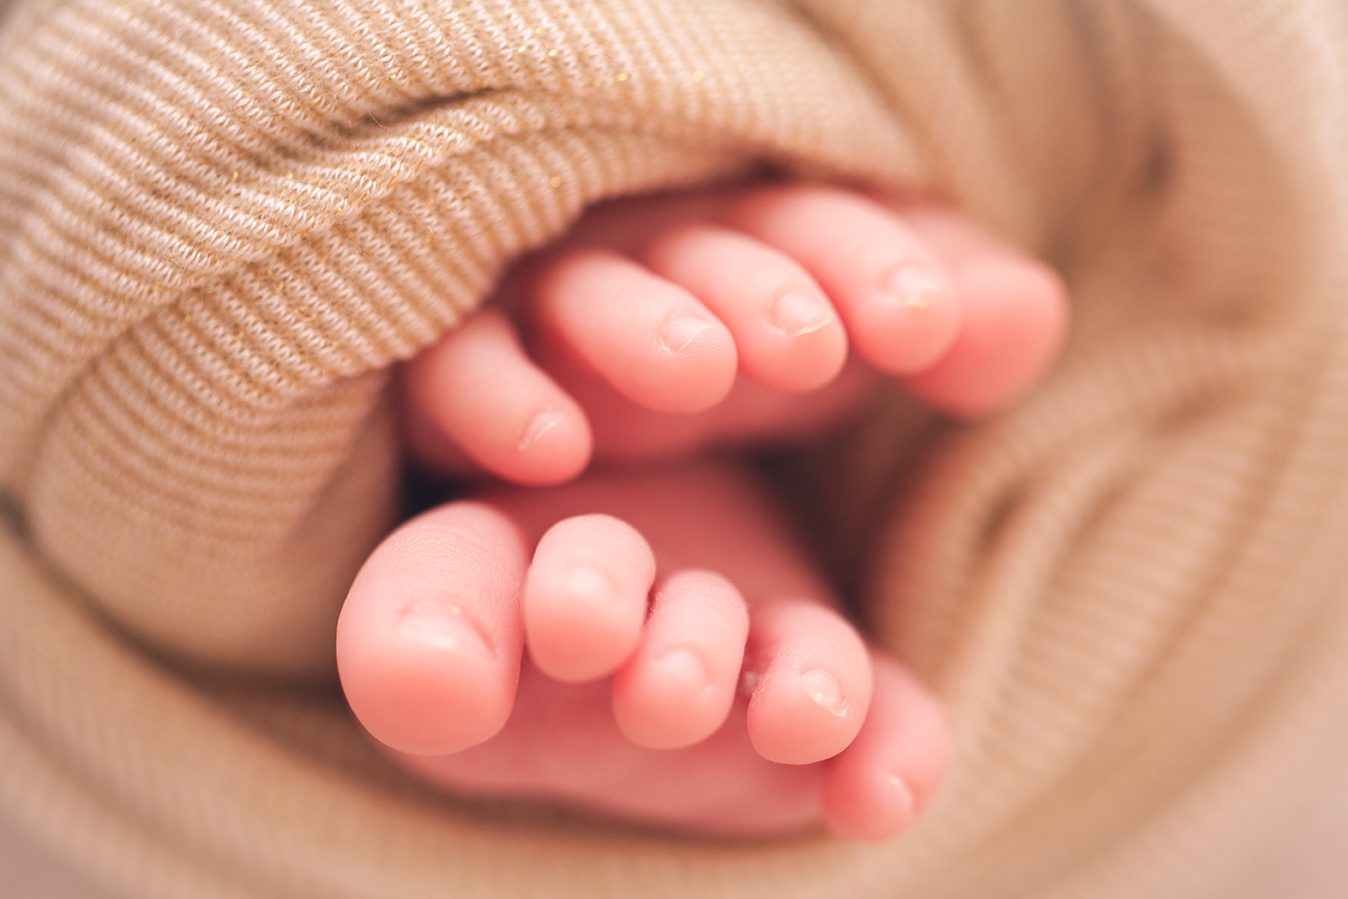 edmonton newborn photographer - macro of feet